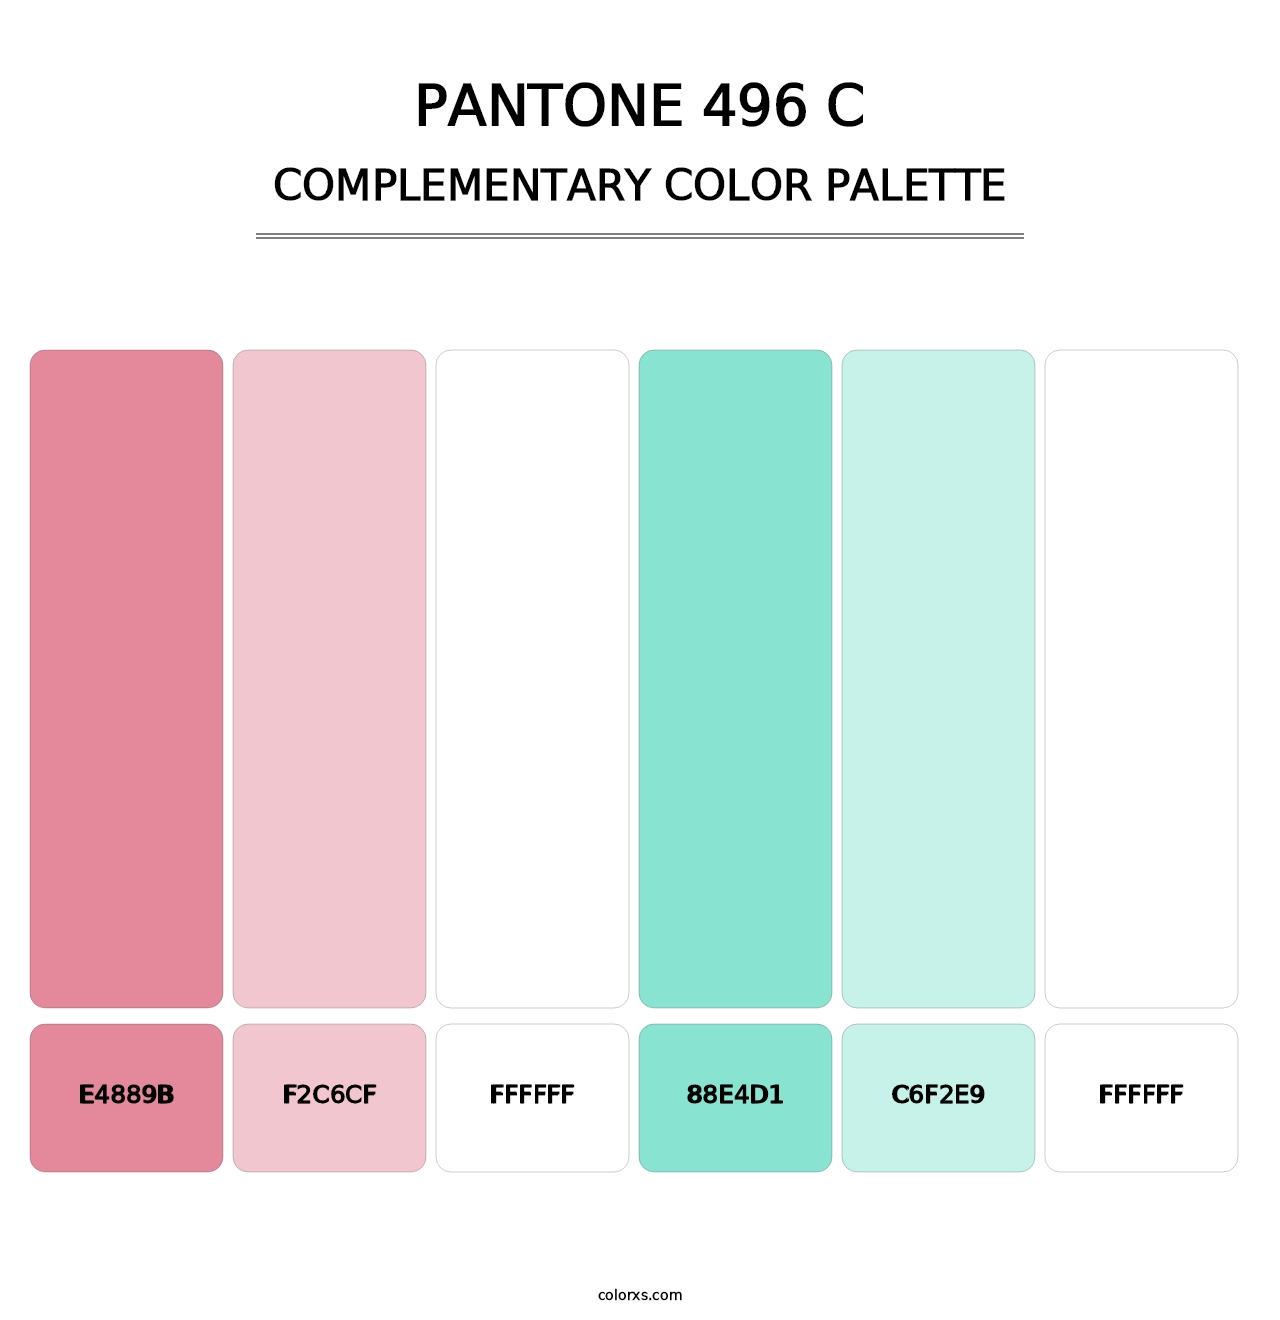 PANTONE 496 C - Complementary Color Palette